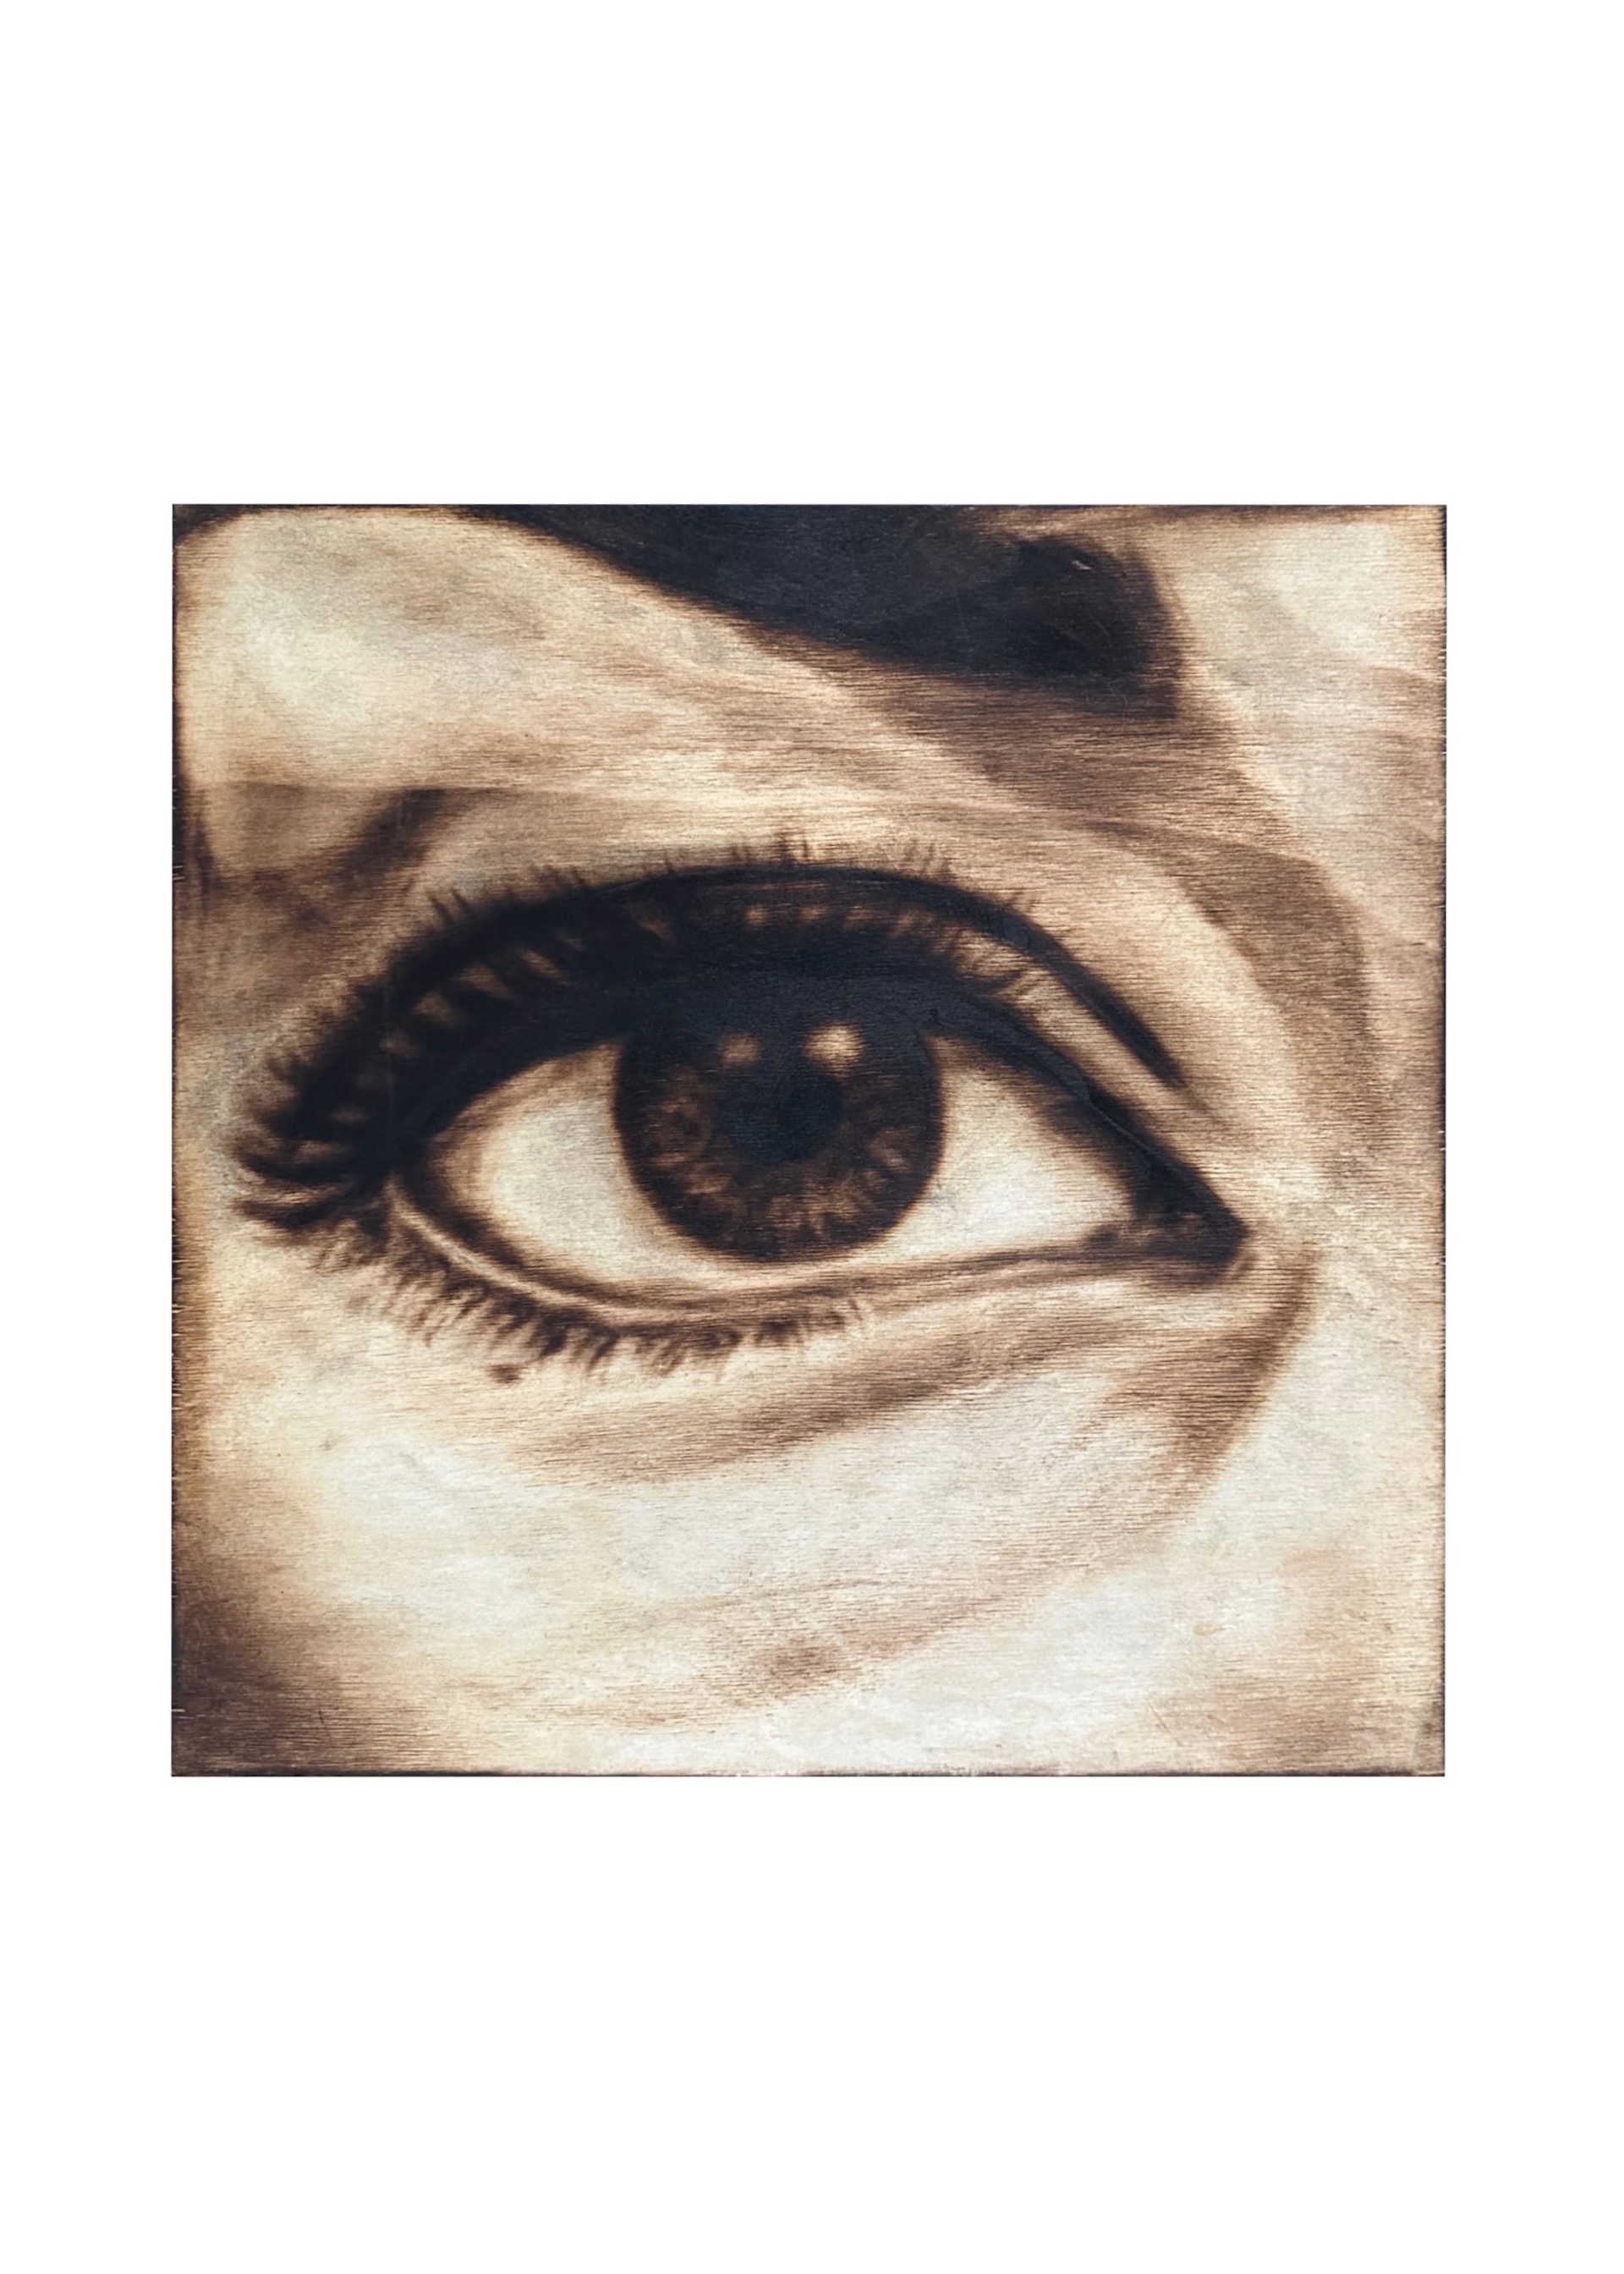 Eye 1 by Zachary Aronson